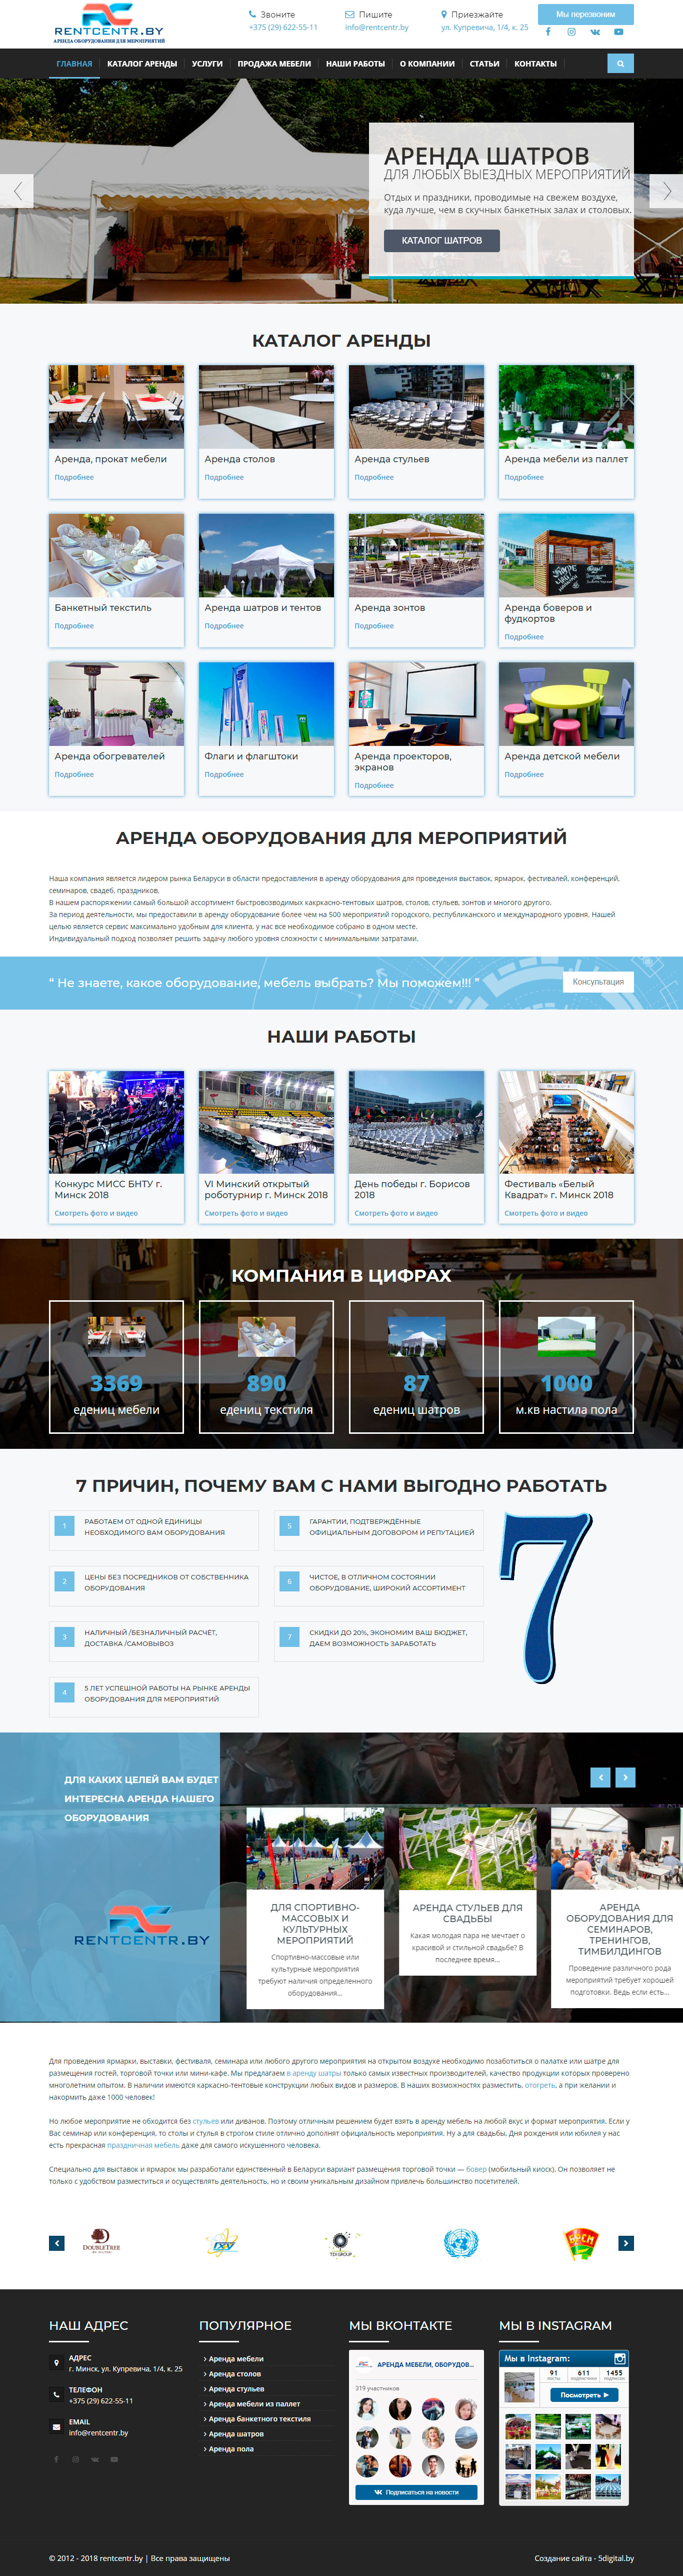 Создание сайта по аренде мебели в Минске